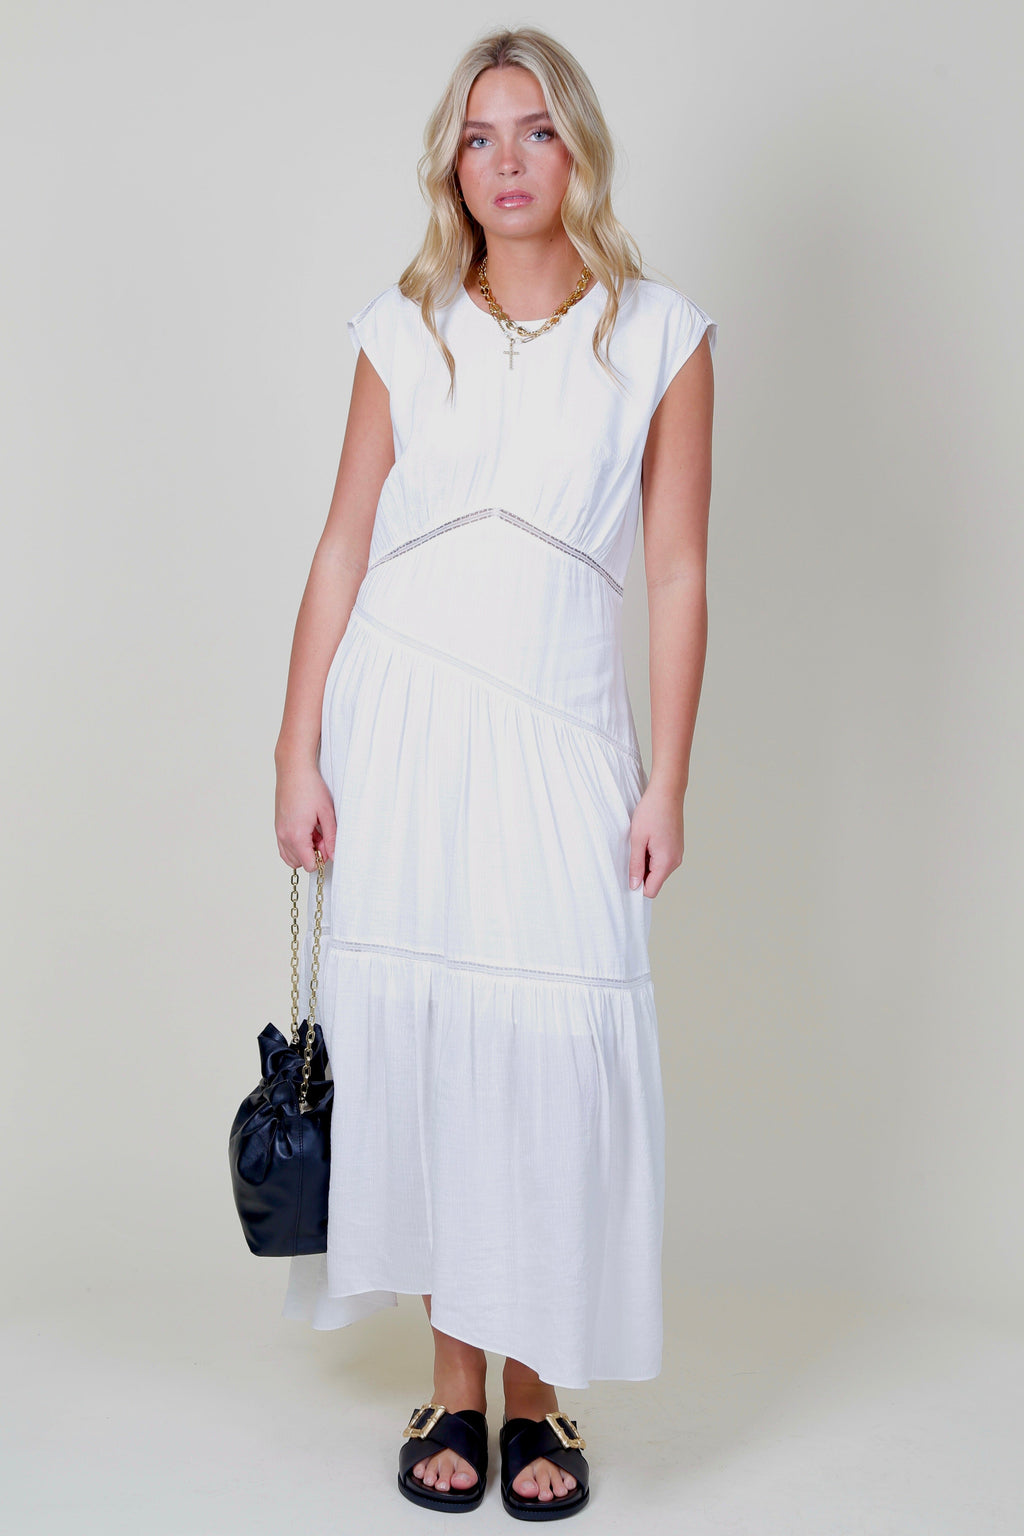 FRAME | Gathered Seam Lace Inset Dress - White